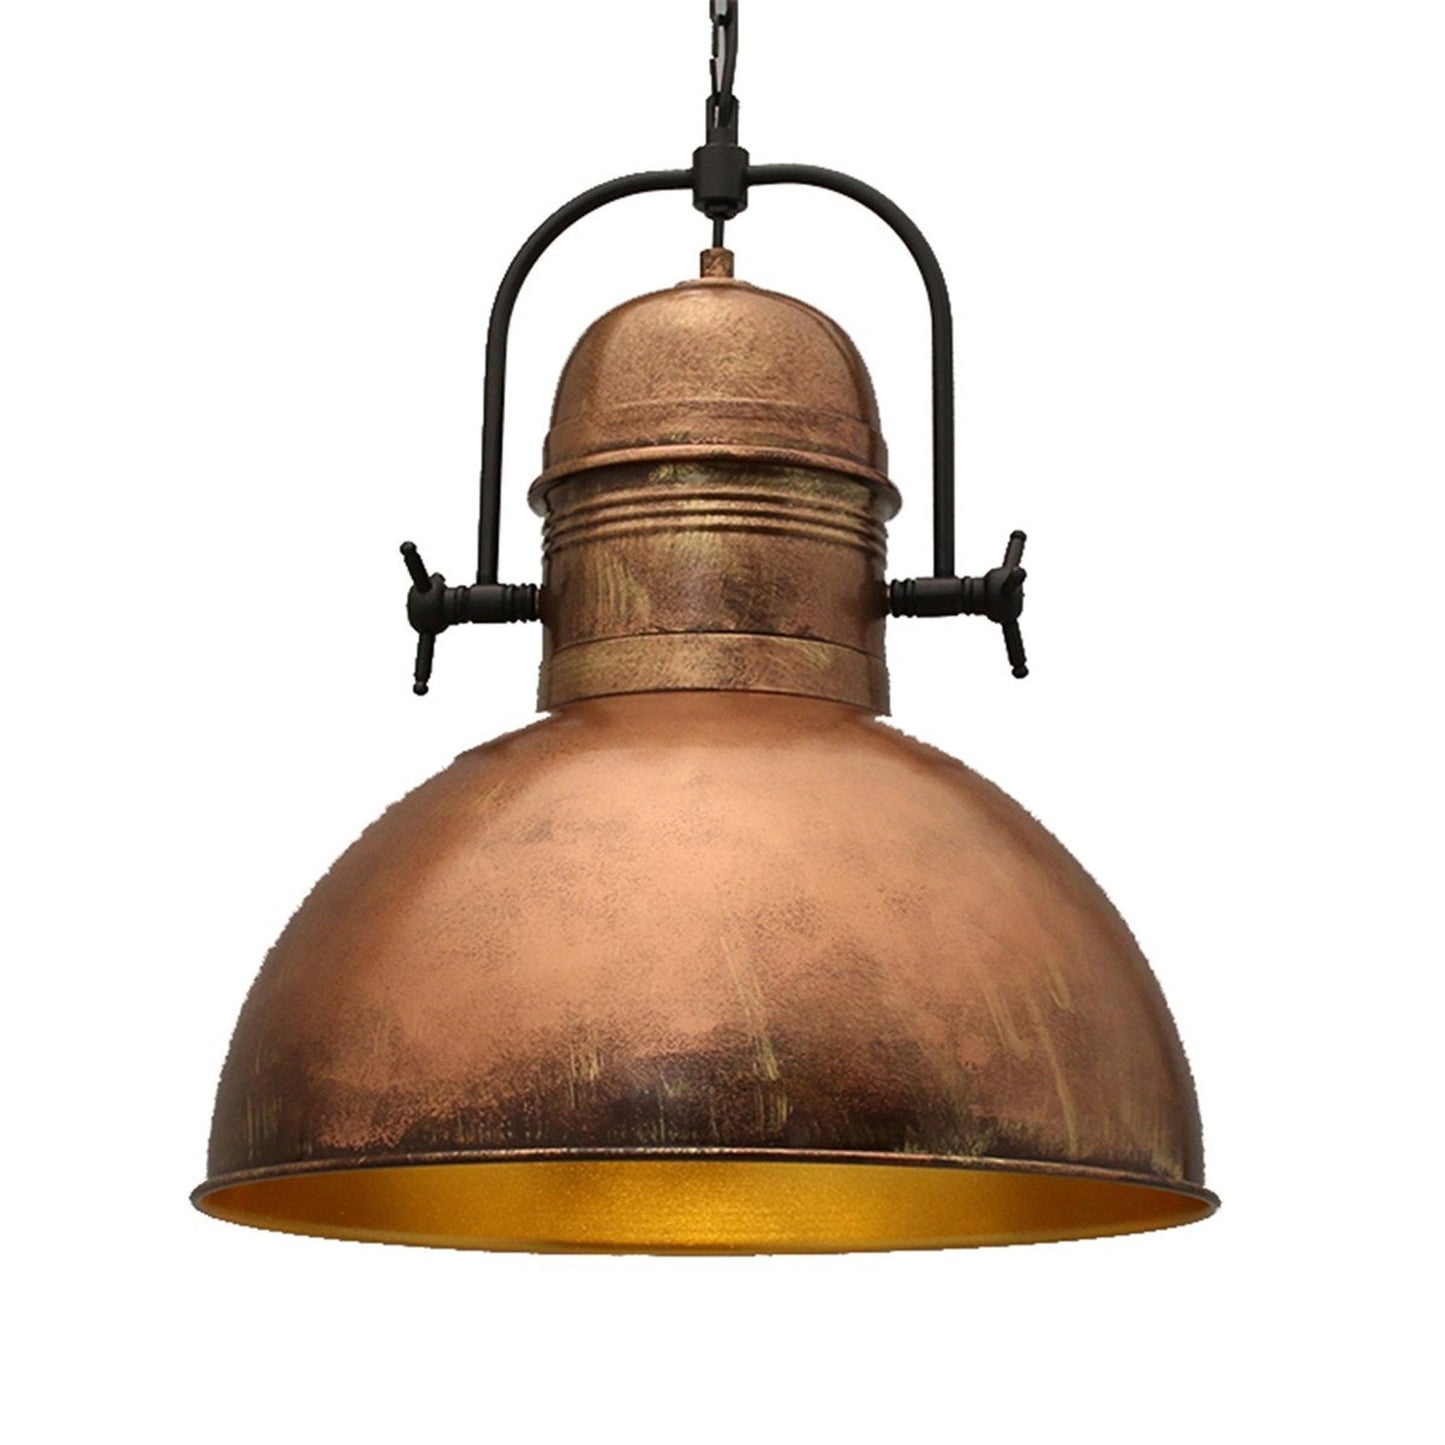 COPPER CAGE LIGHTING, Industrial Lighting, Pendant Light, Vintage Lighting, Hanging Home Pendant Light, Copper Vintage, Copper Pendant Light